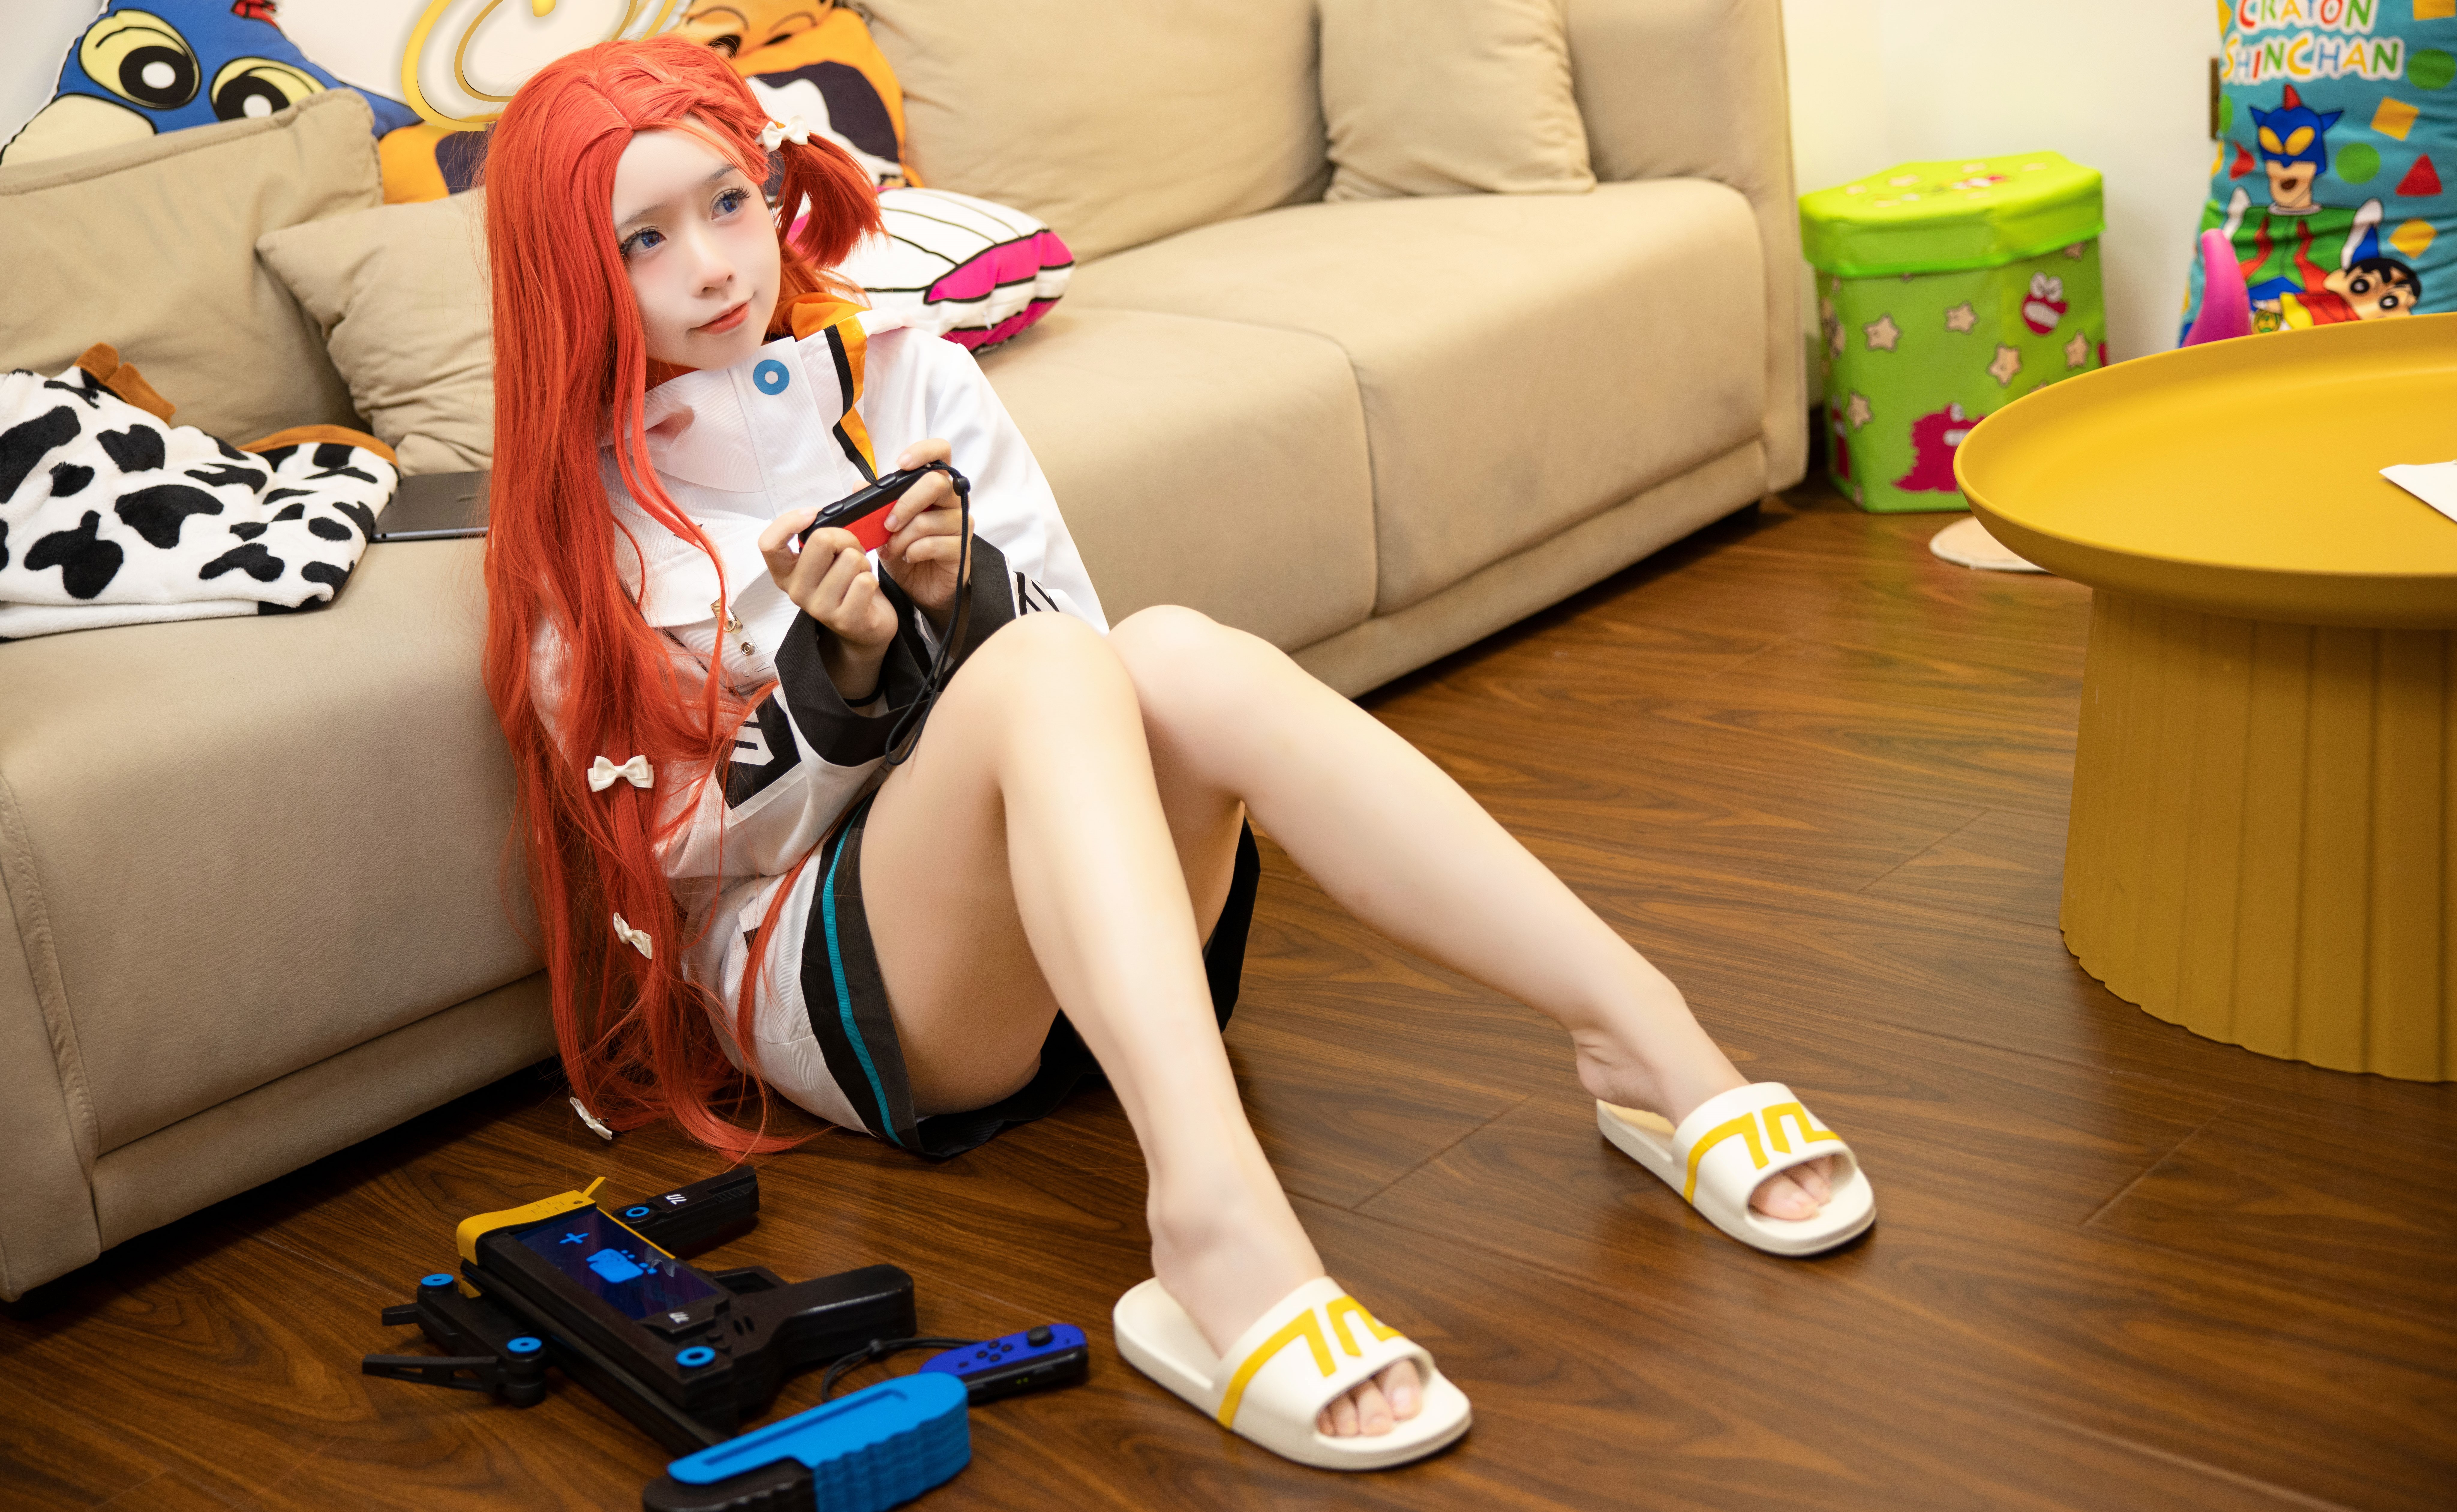 People 8192x5042 G44 (Model) Hanaoka Yuzu couch Nintendo Switch looking at viewer long hair Asian